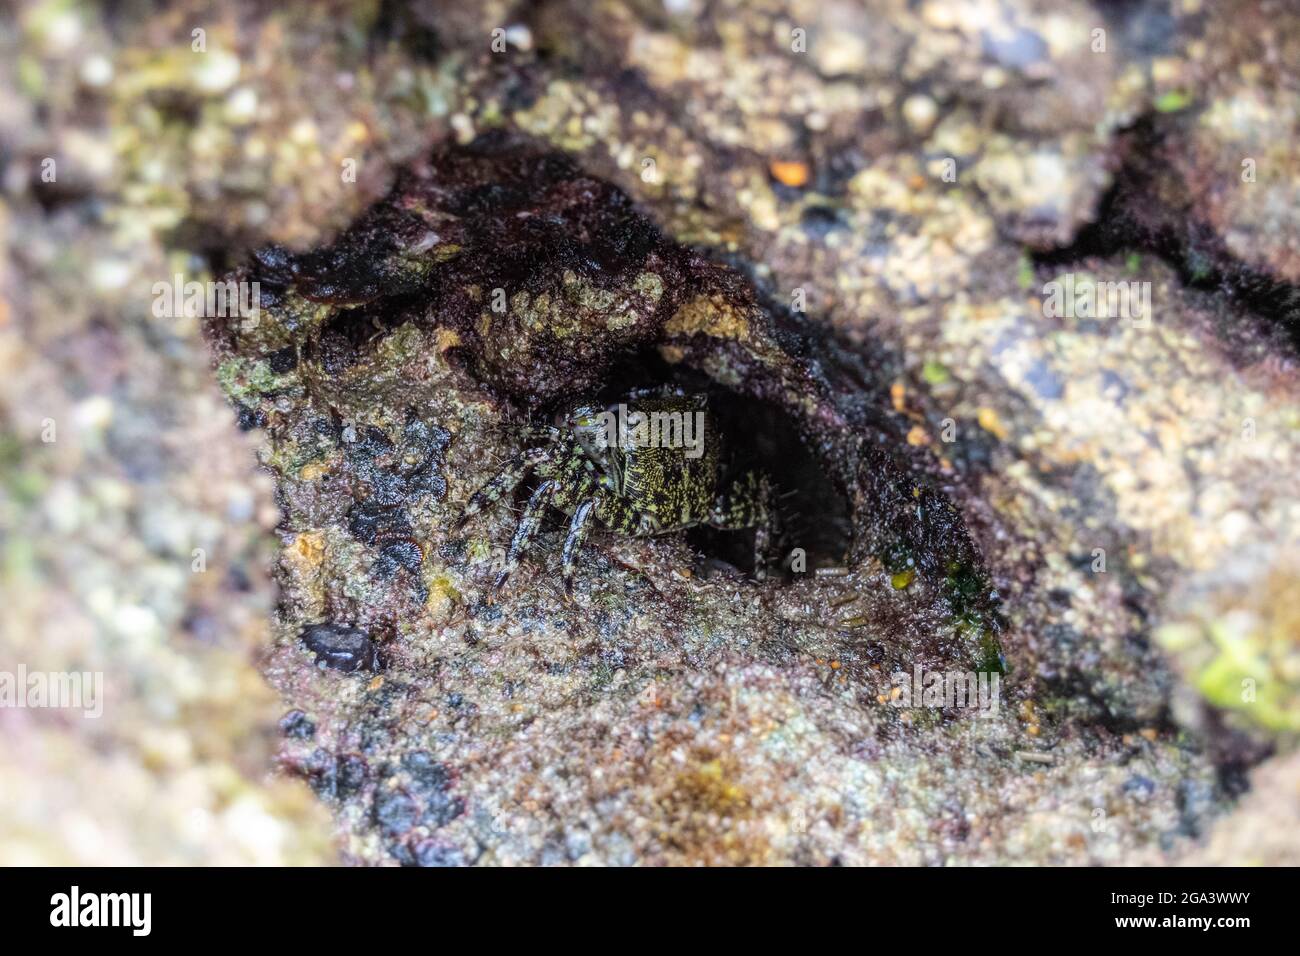 Carcinus maenas crab specie. Small sea crab hides in crack of rock in Portuguese coast. European green crab common littoral crab. Stock Photo